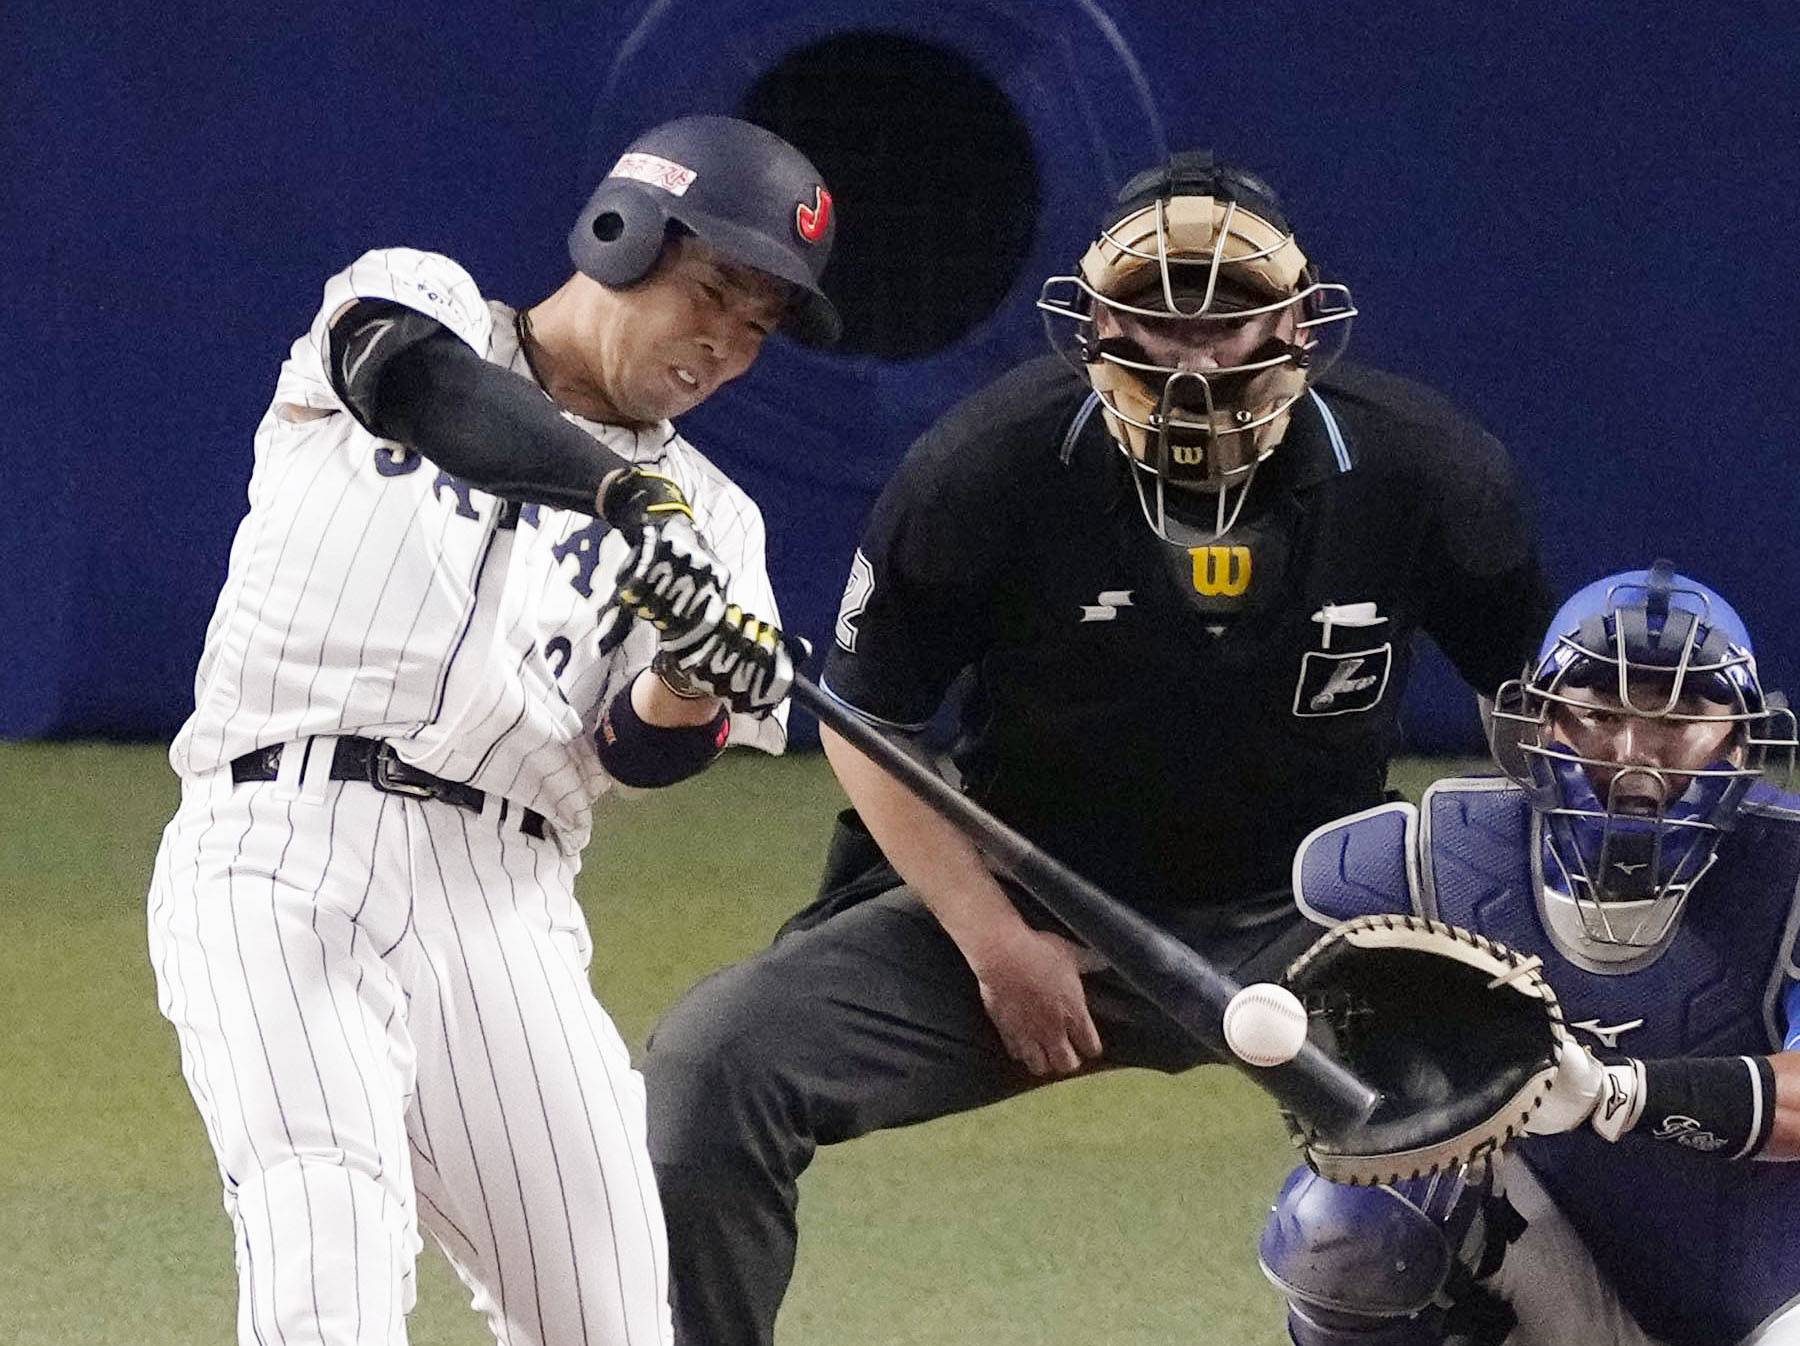 Japan players to watch besides Shohei Ohtani during 2023 World Baseball Classic